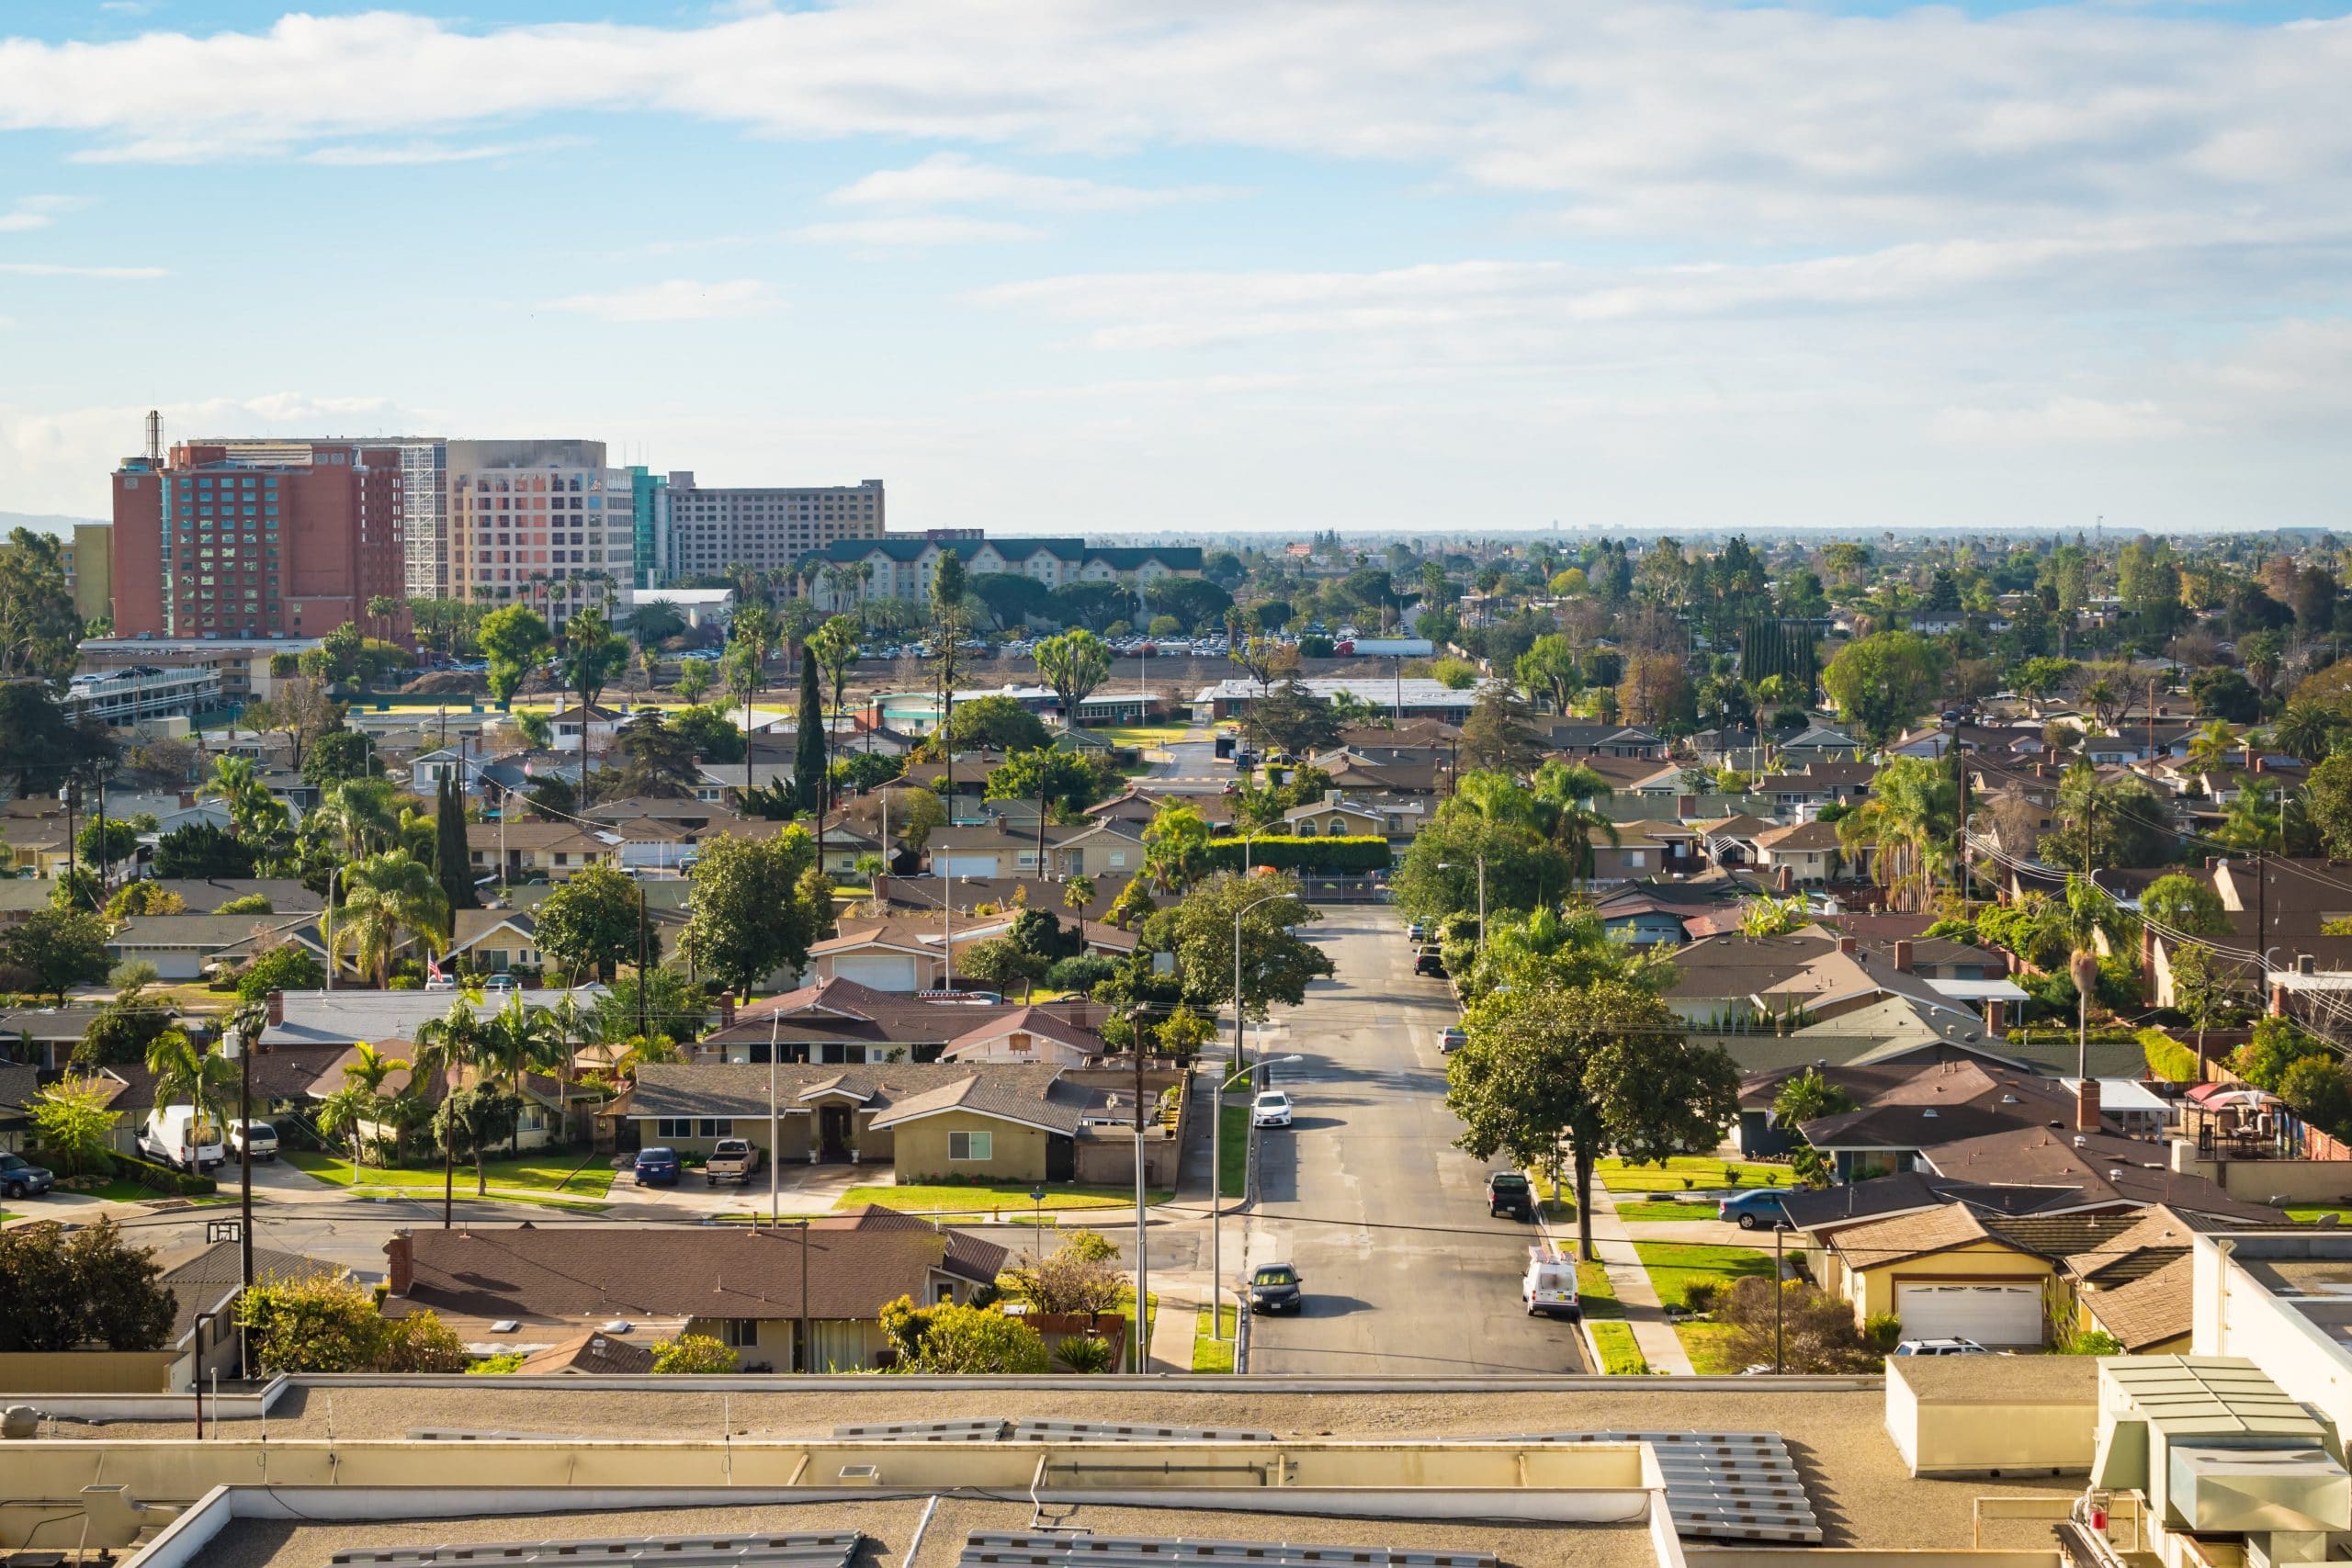 residential area of anaheim california best neighborhoods to live in anaheim